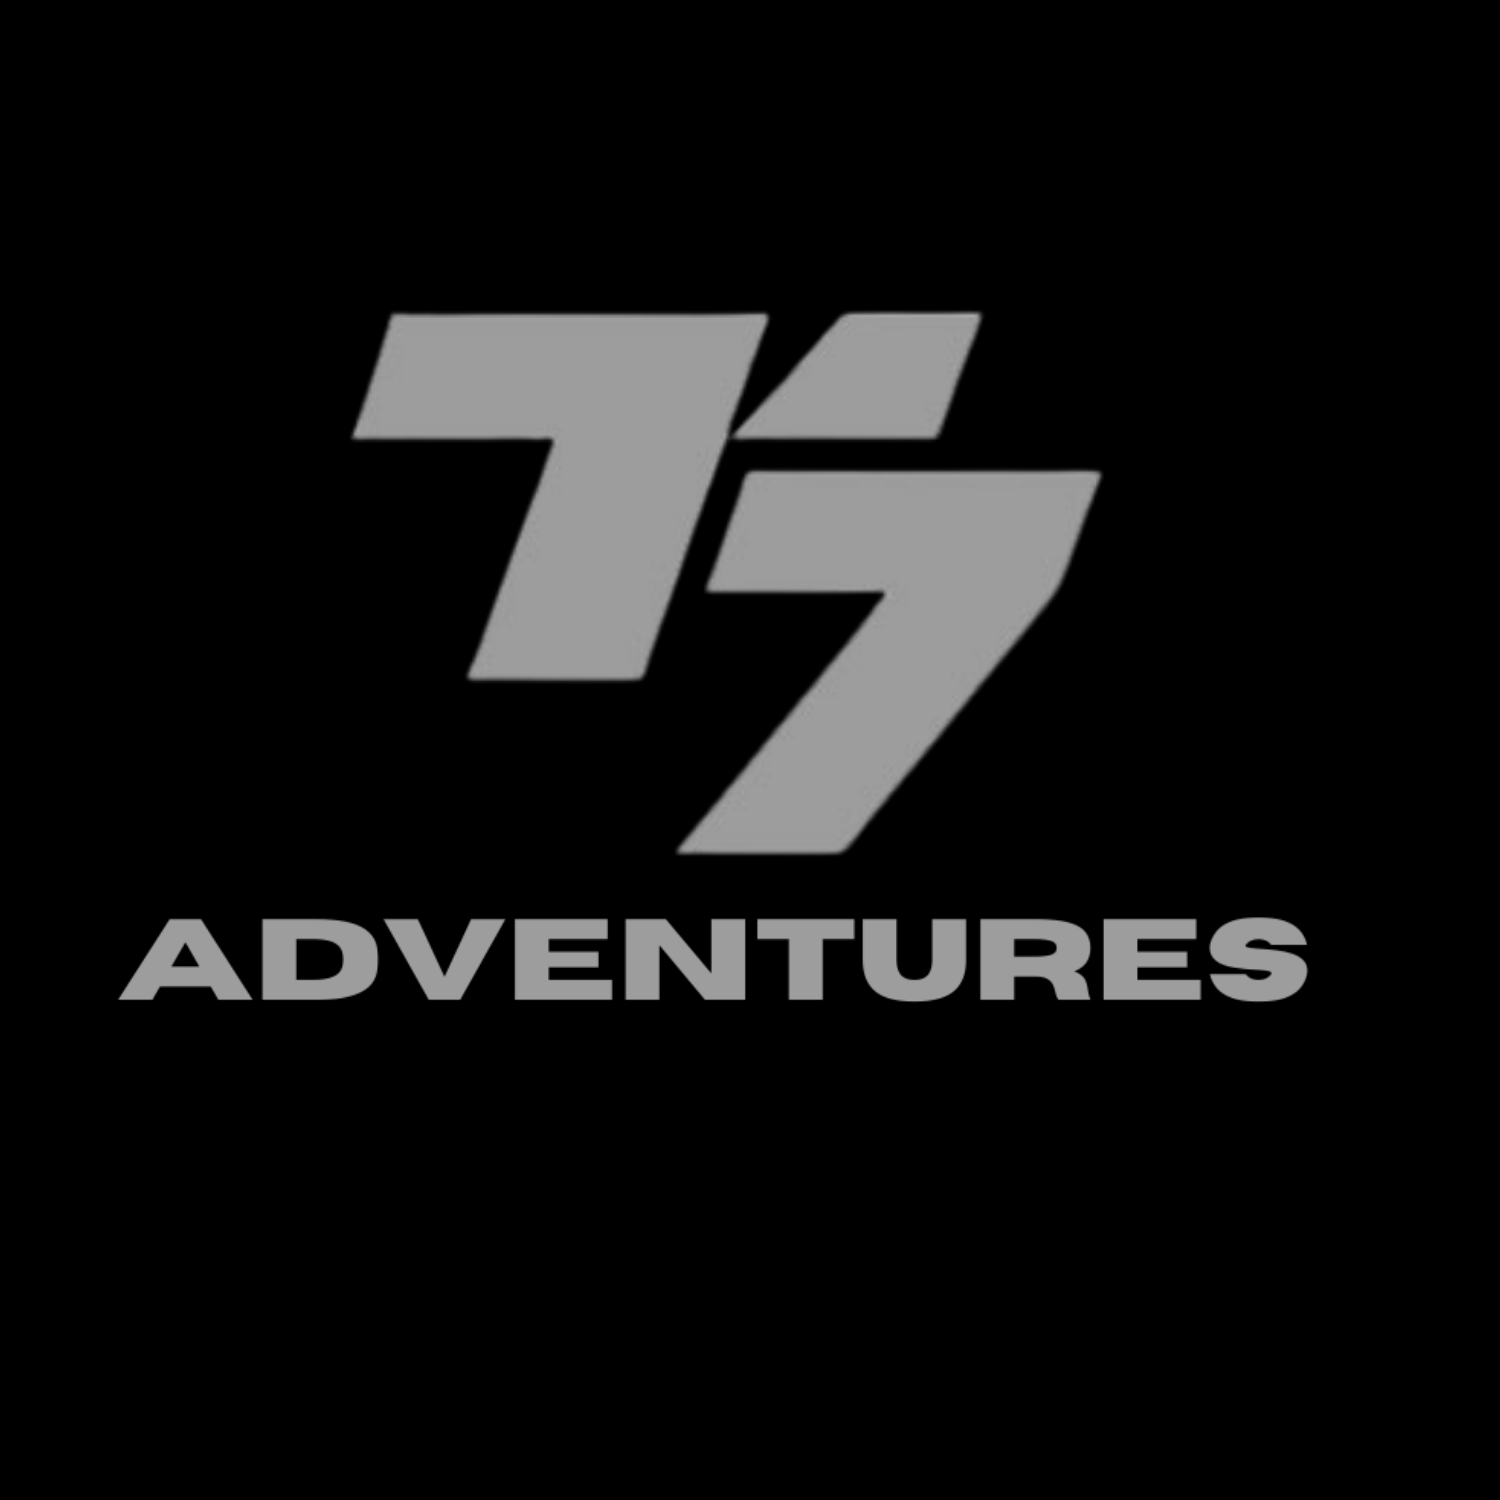 T7Adventures